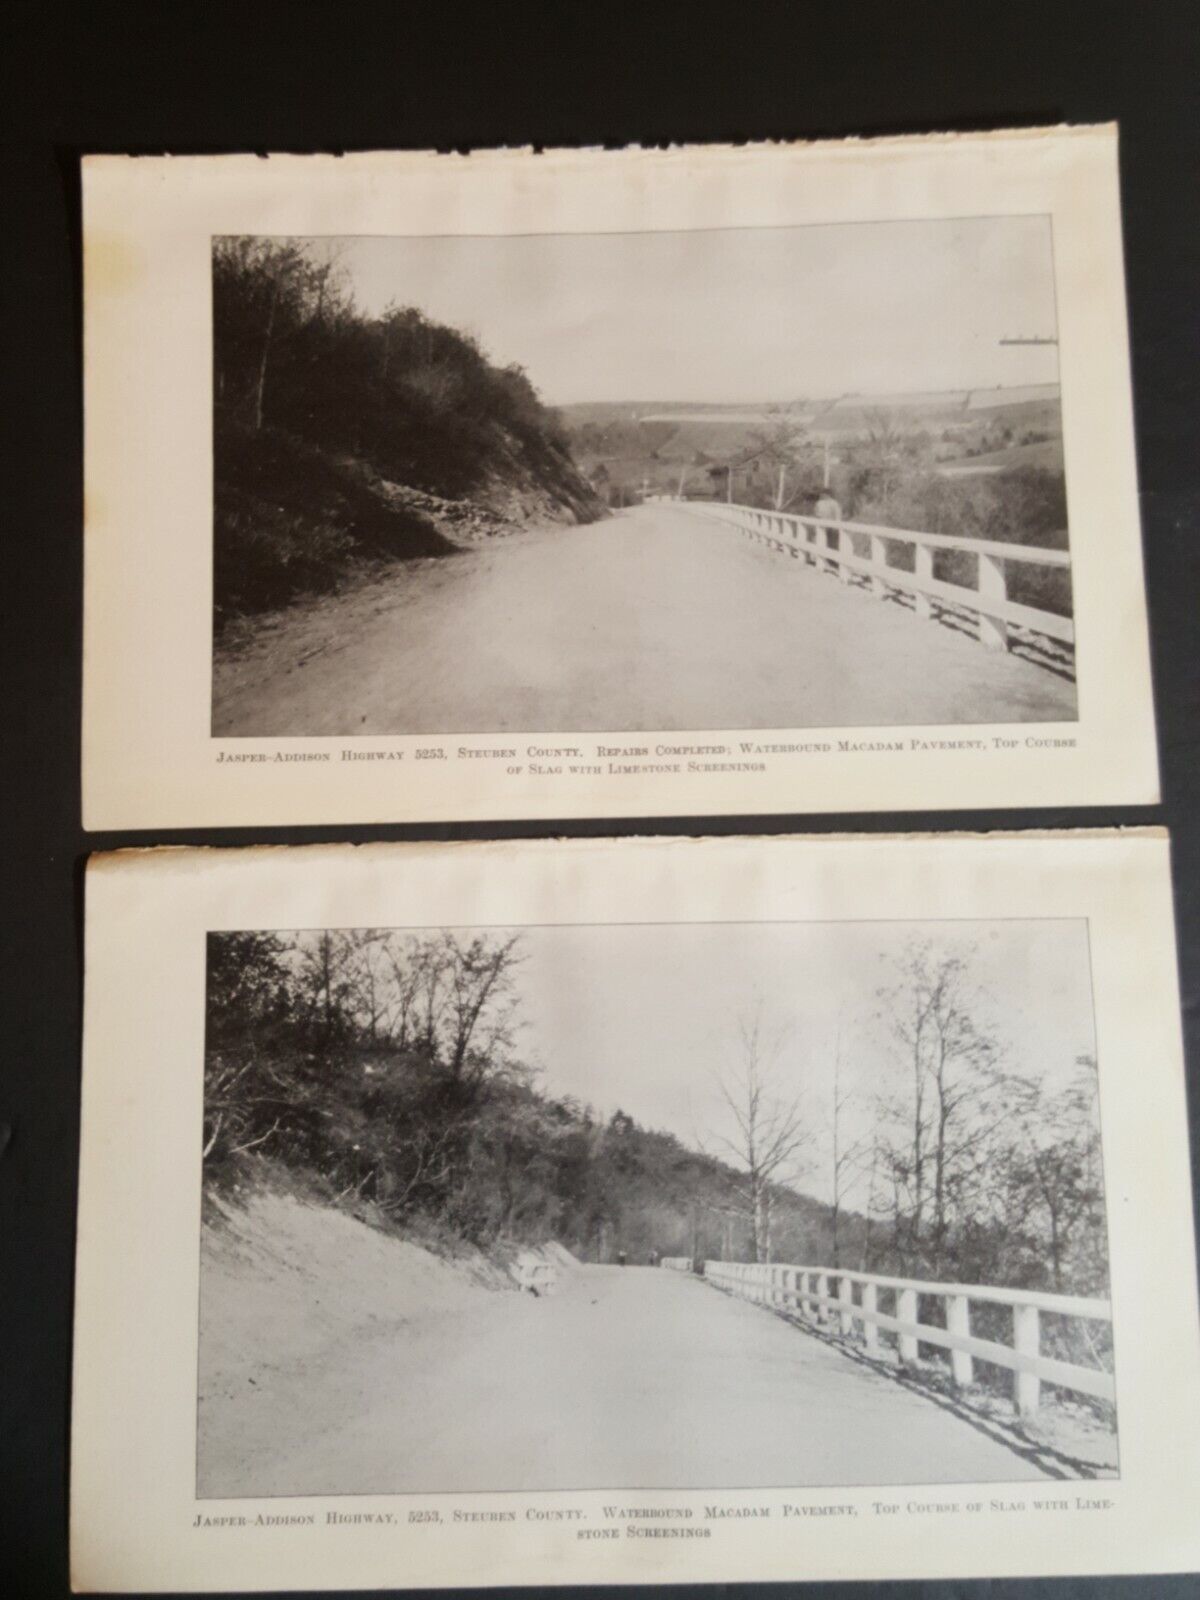 1915 lot of 2 photo plates of JASPER ADDISON HIGHWAY  Steuben County new york